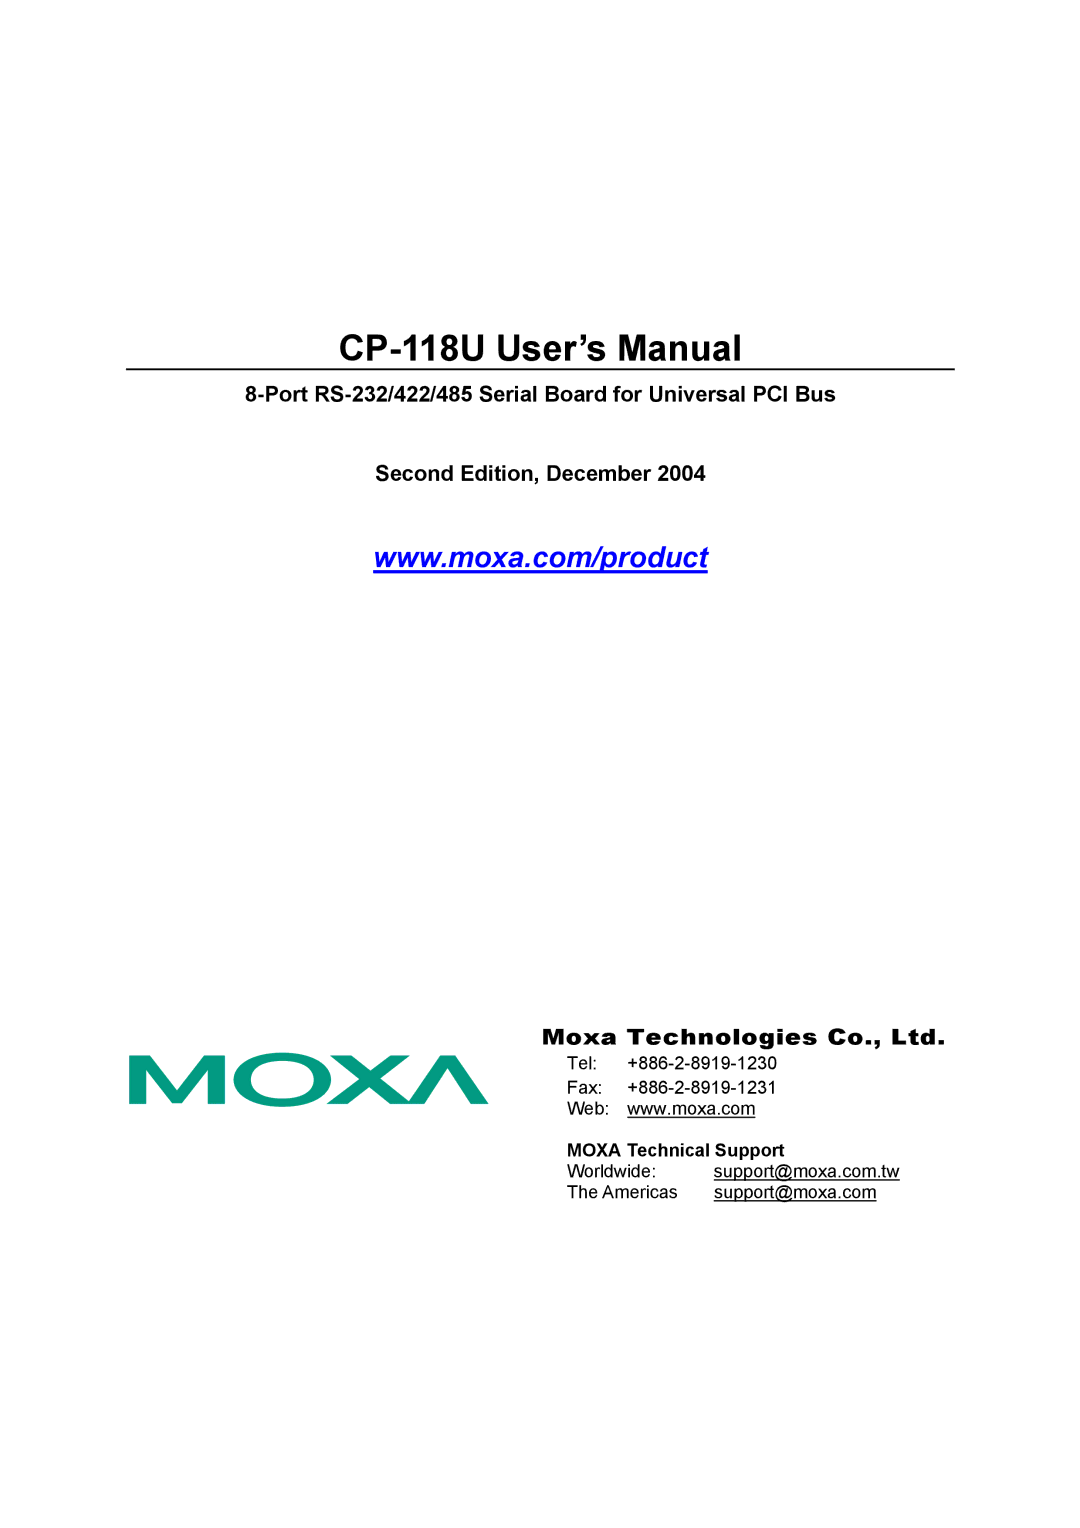 Moxa Technologies user manual CP-118U User’s Manual 